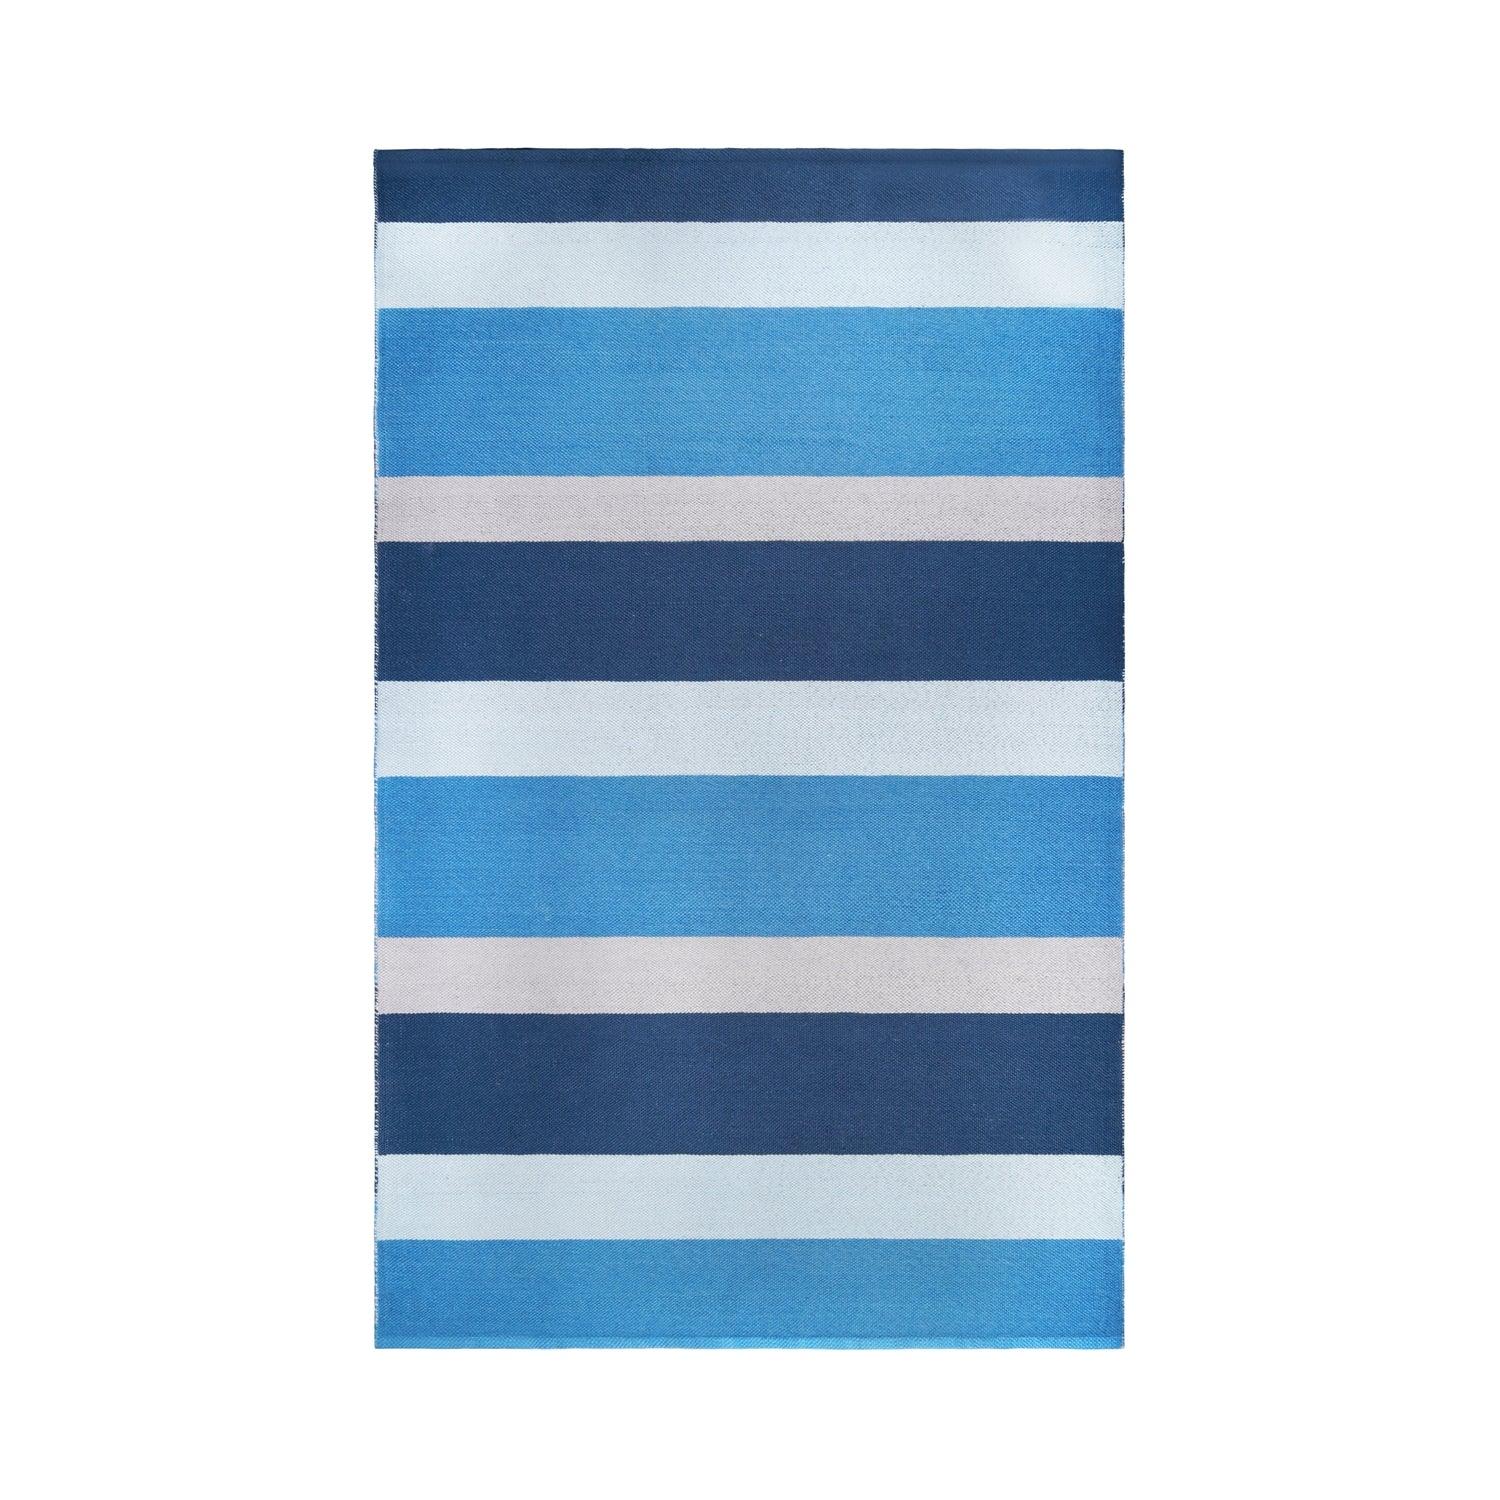  Superior Modern Stripes Area Rug Indoor Outdoor Durable Pattern Rug - Navy Blue